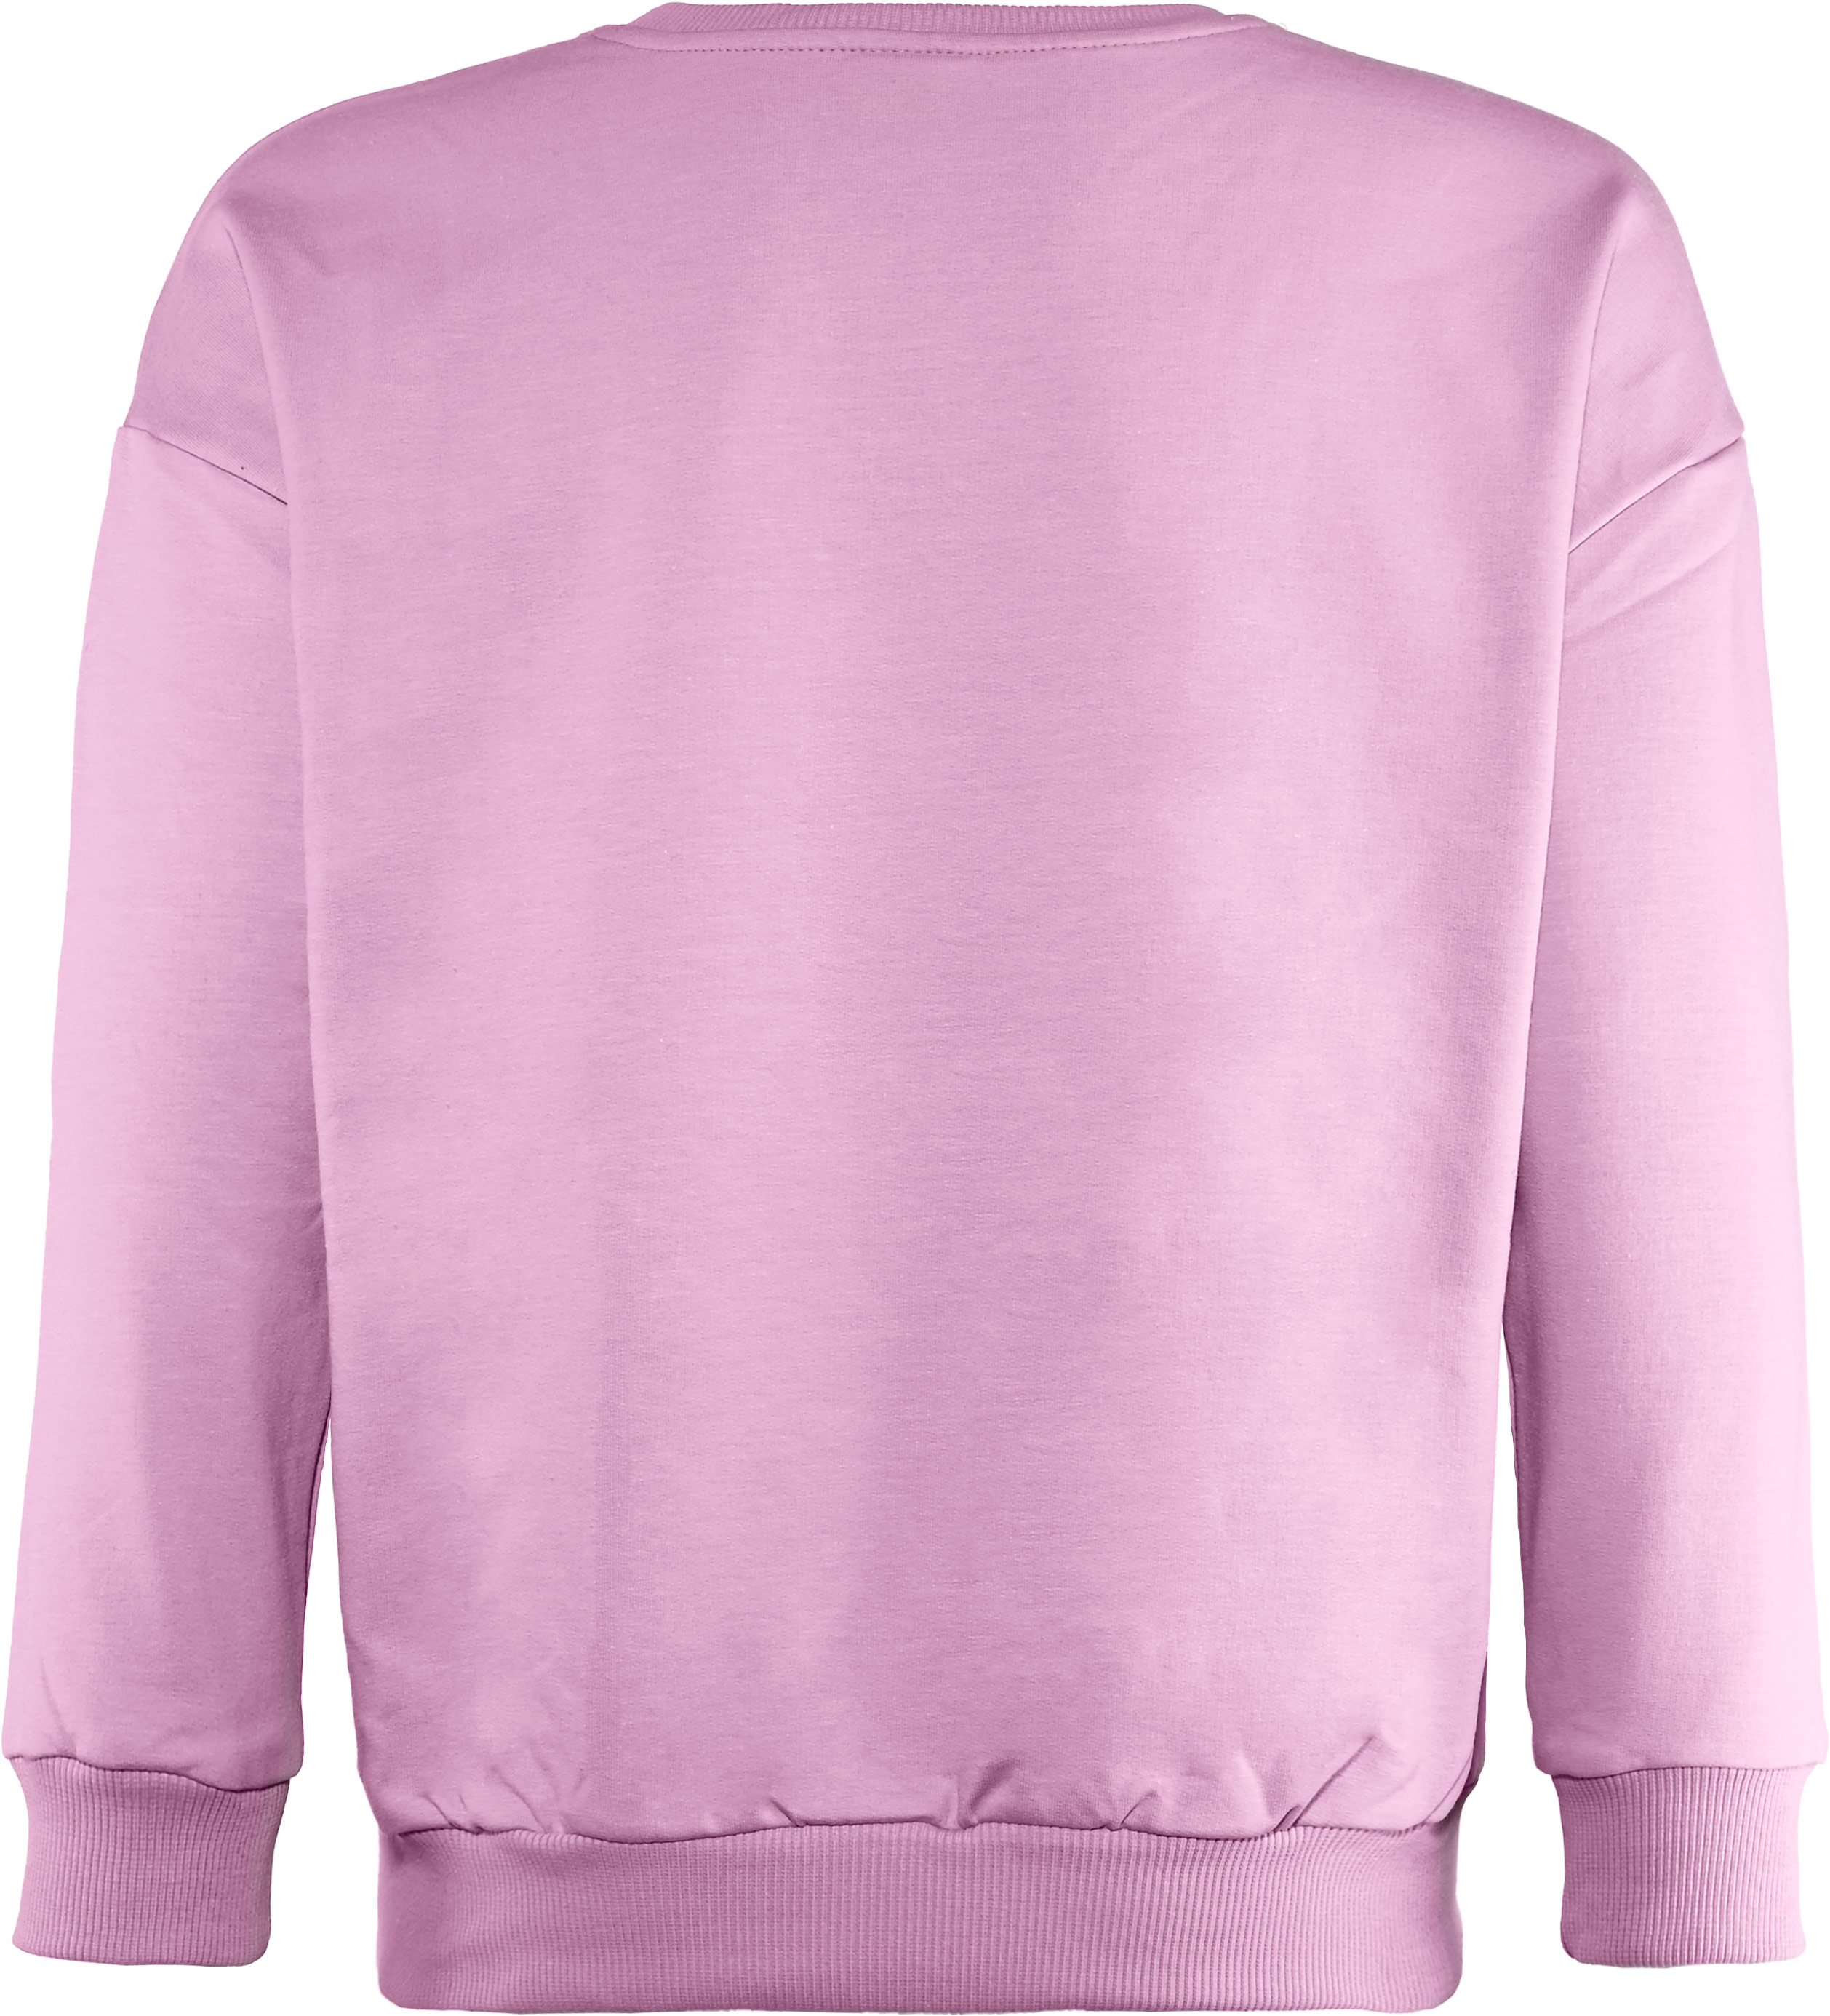 5912-JRNY Girls Sweatshirt -Happy